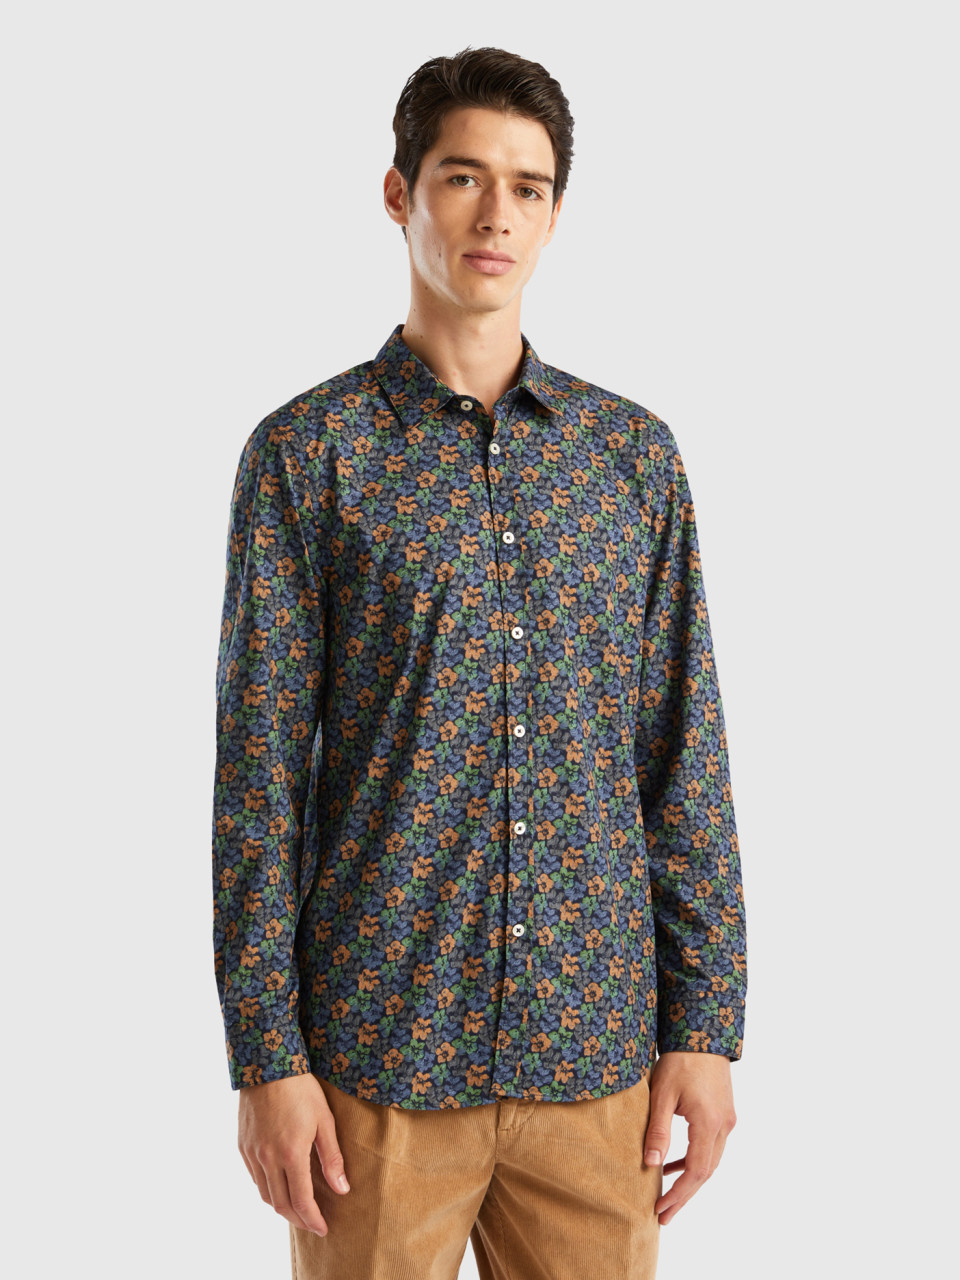 Benetton, Patterned Slim Fit Shirt, Multi-color, Men